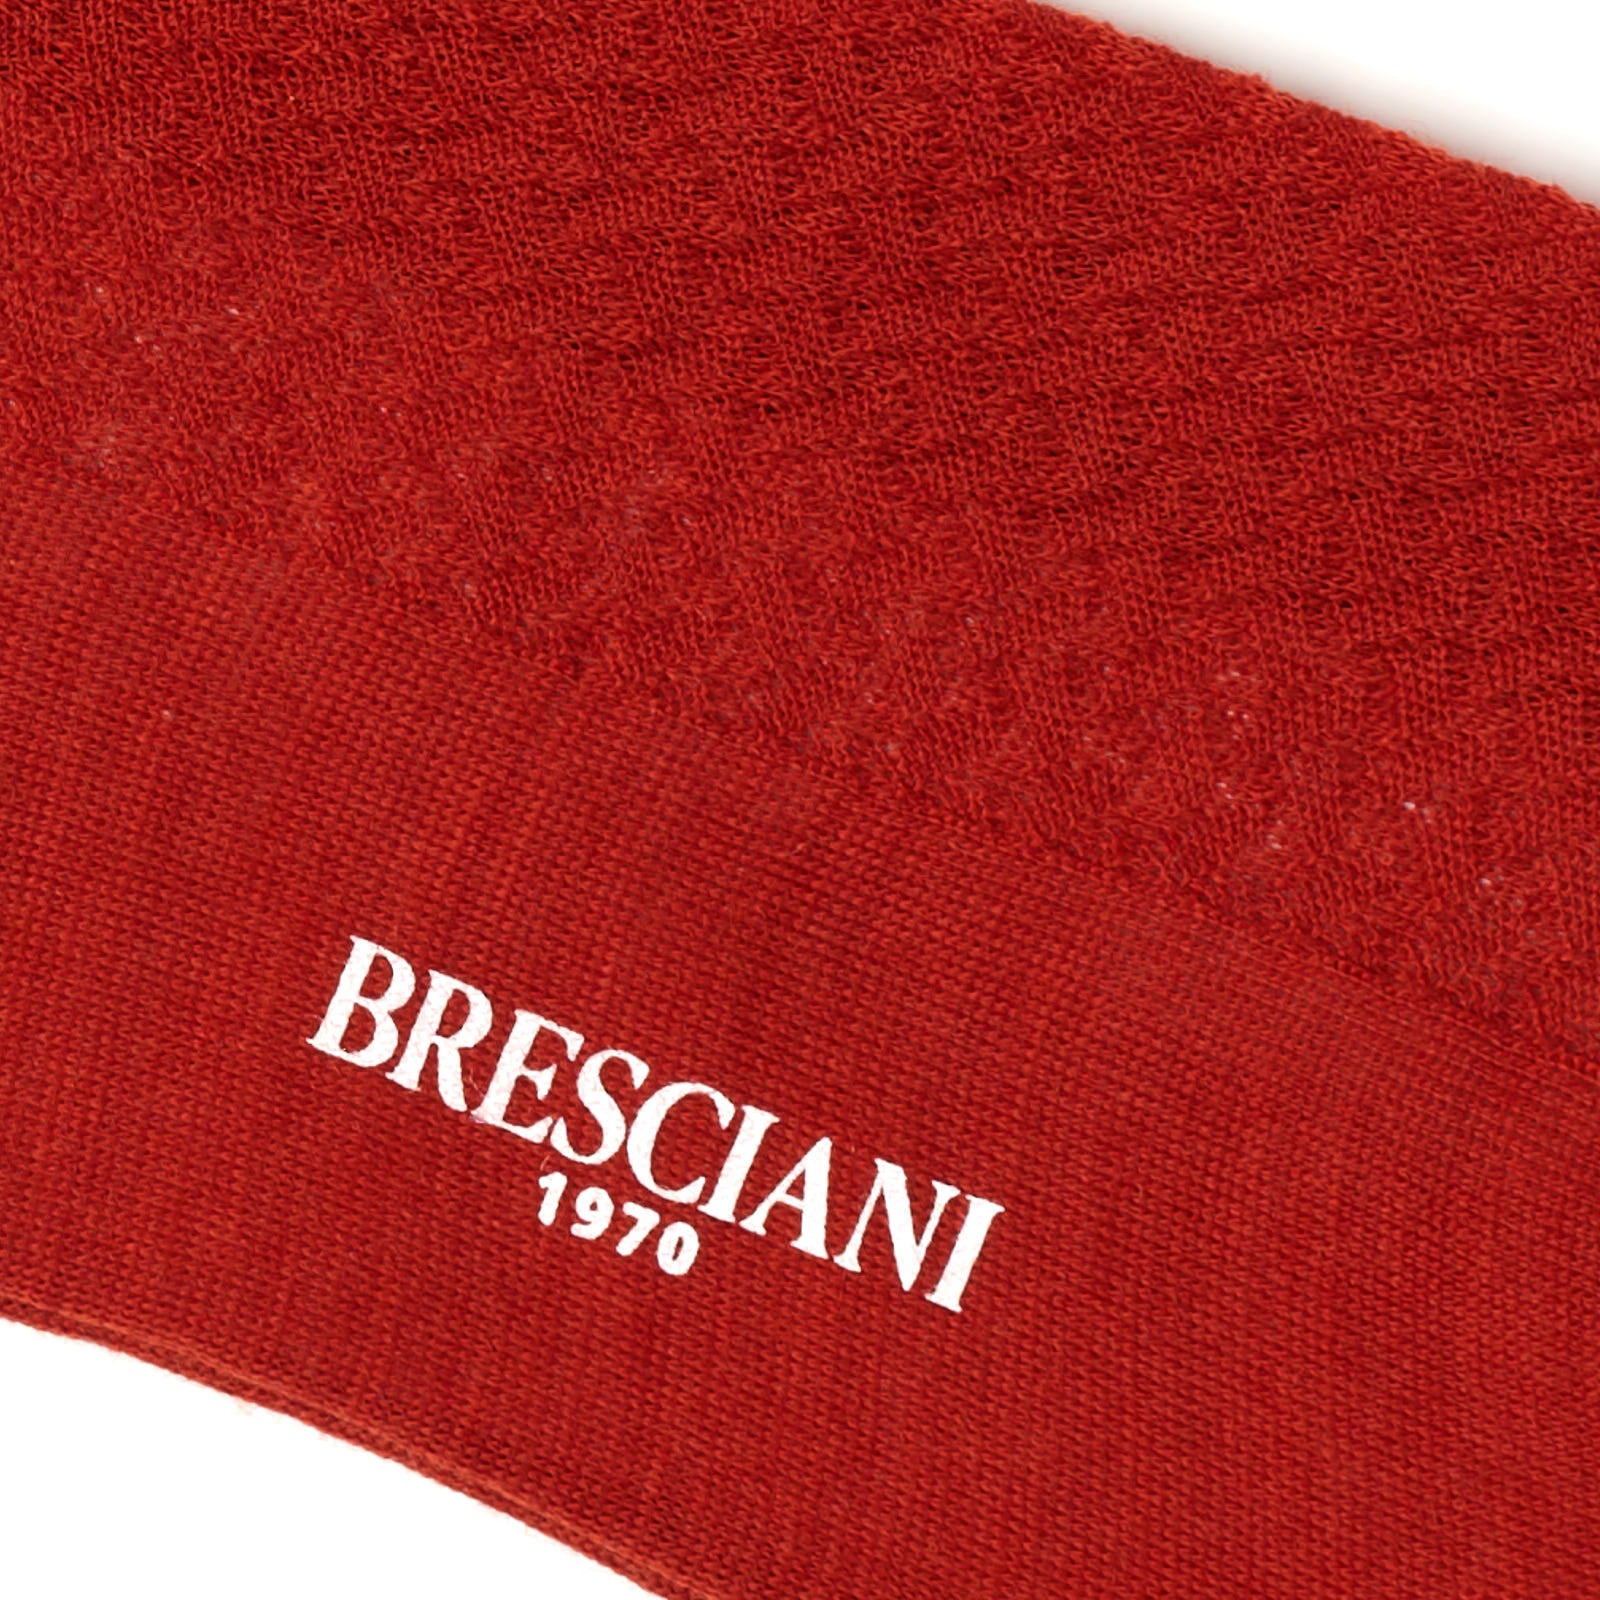 BRESCIANI Wool Micro-Design Mid Calf Length Socks US M-L BRESCIANI